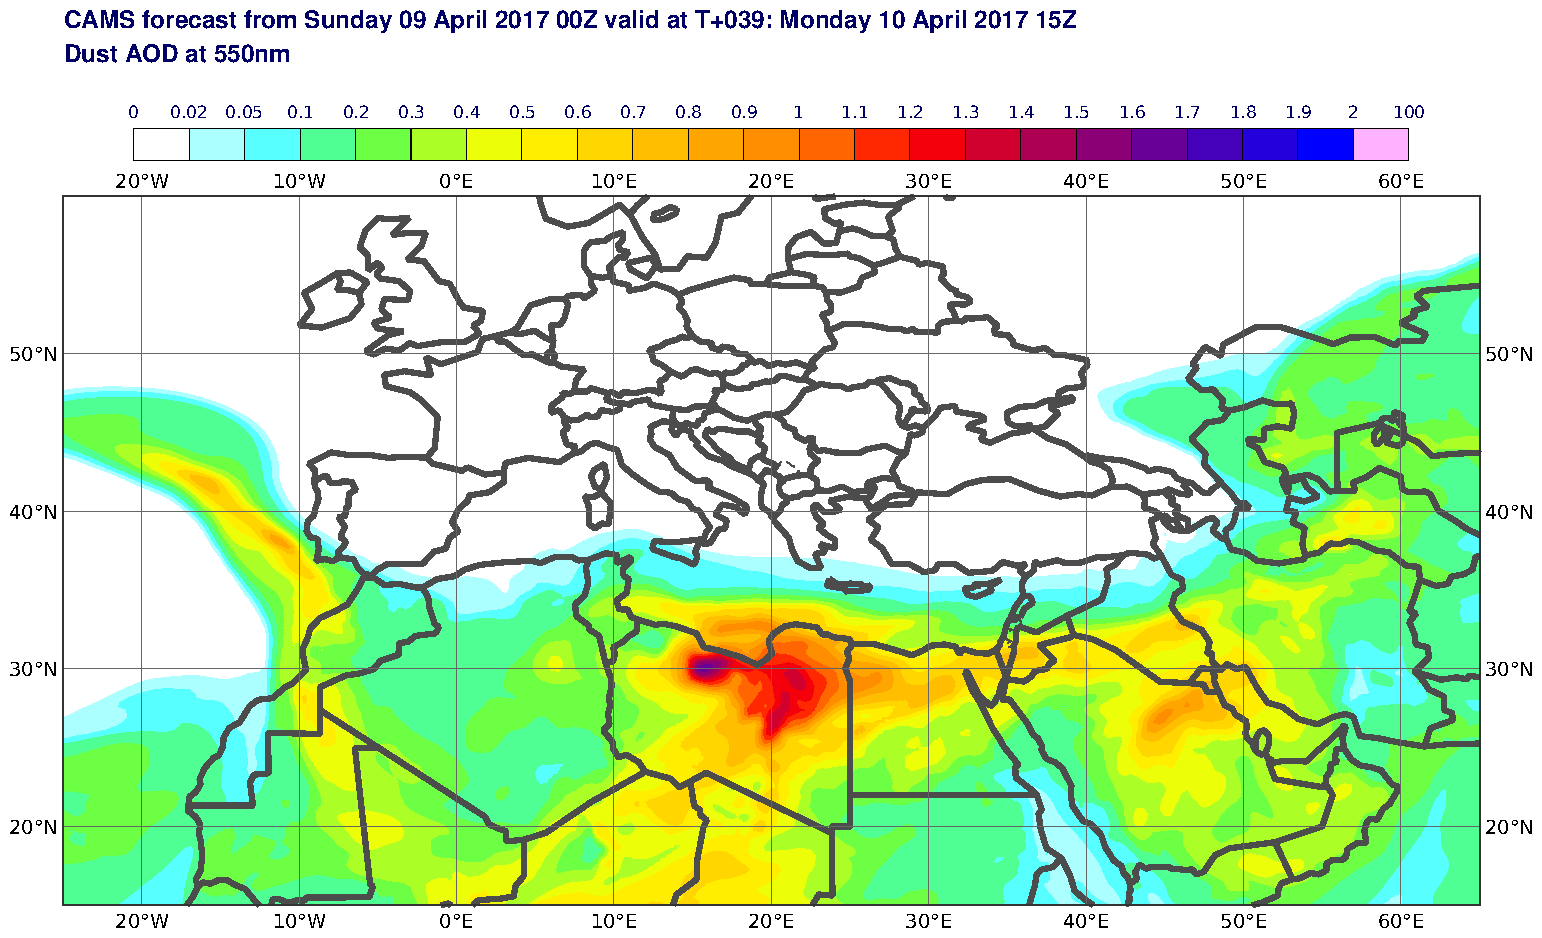 Dust AOD at 550nm valid at T39 - 2017-04-10 15:00